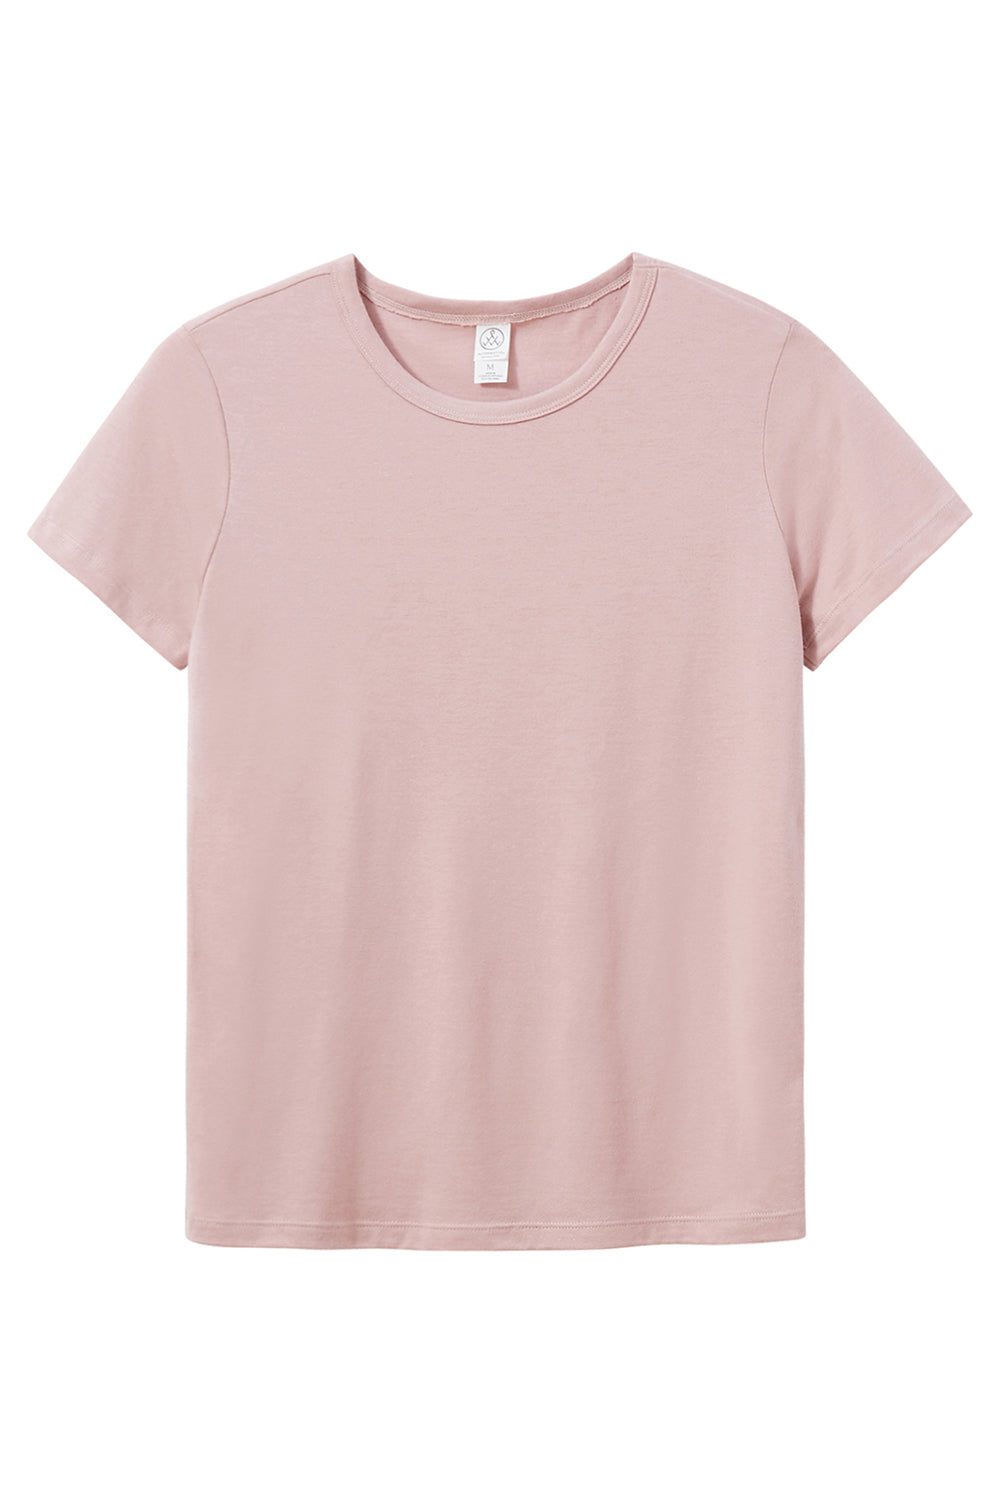 Alternative 4450HM Womens Modal Short Sleeve Crewneck T-Shirt Rose Quartz Pink Flat Front